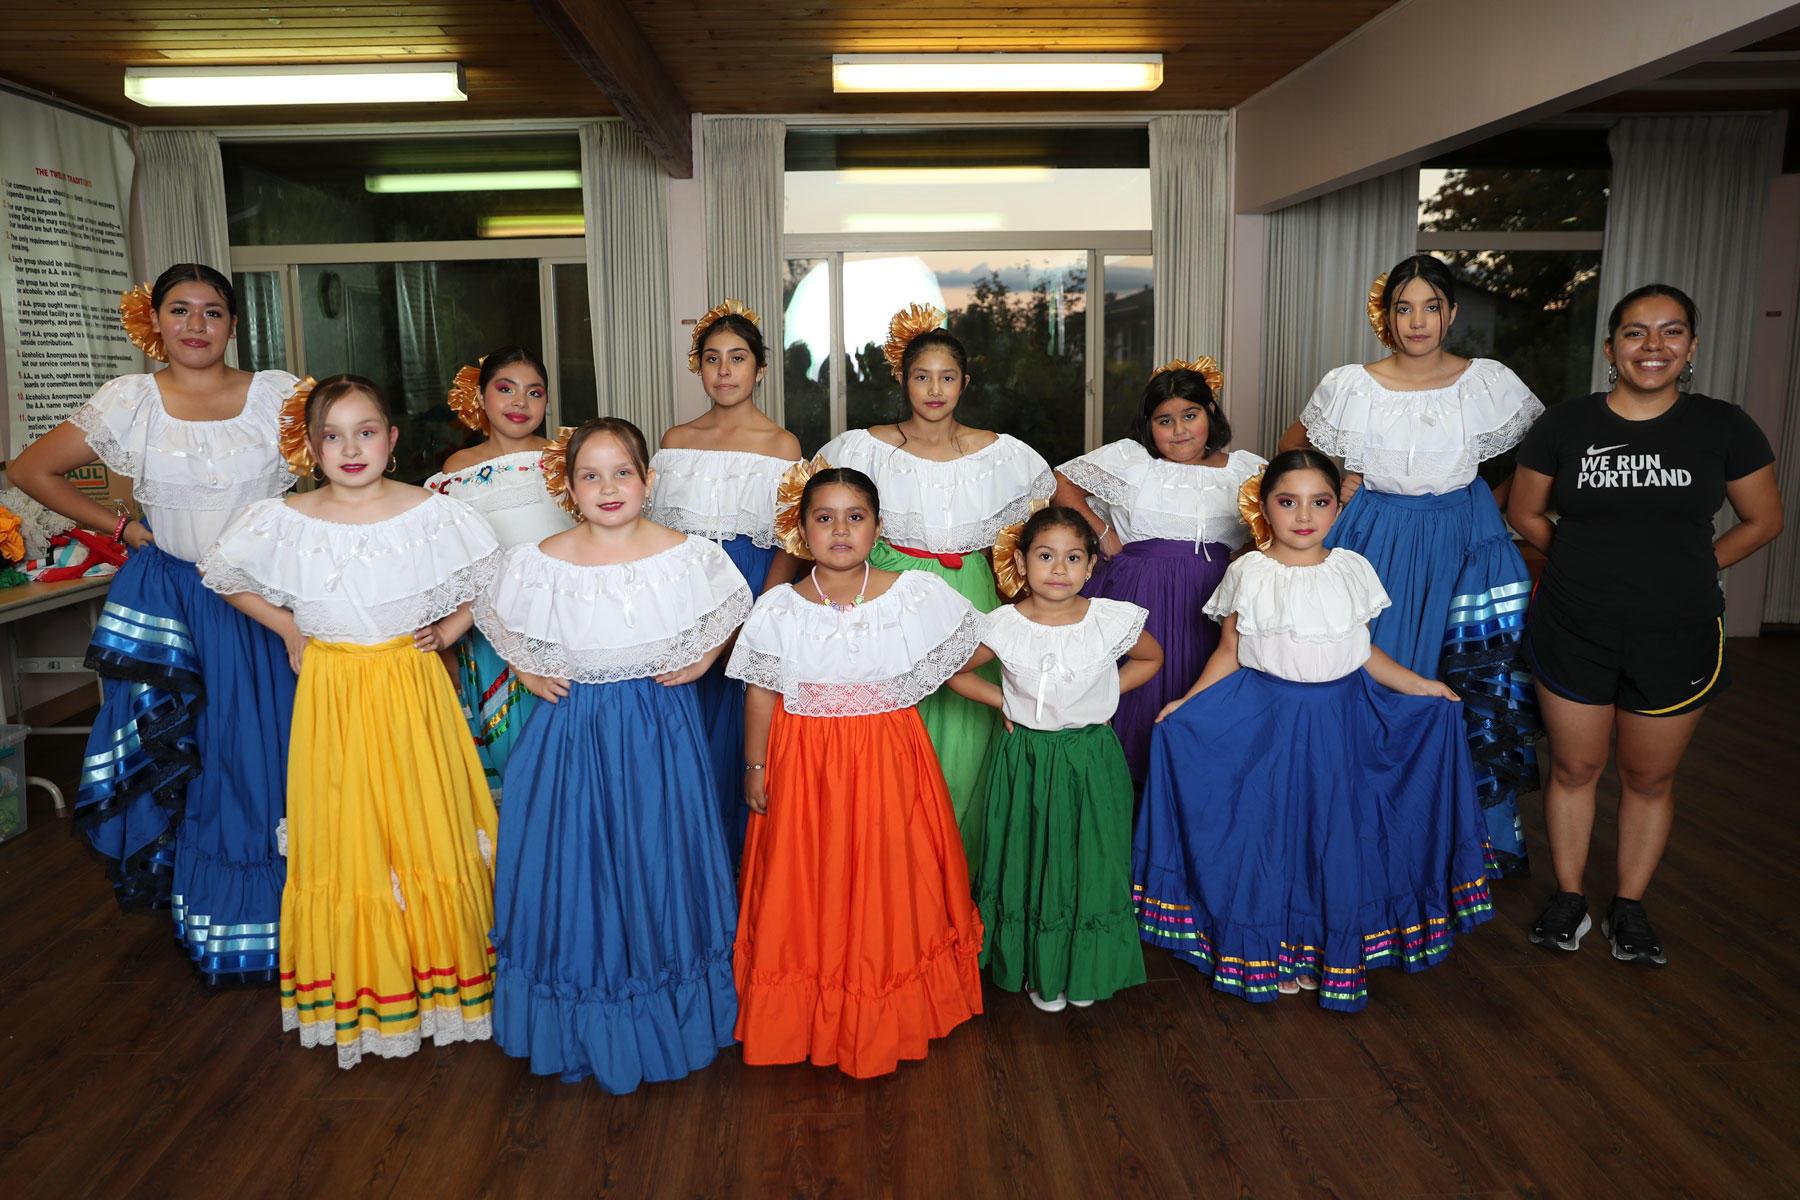 Baile Folklórico dancers pose for a group photo.